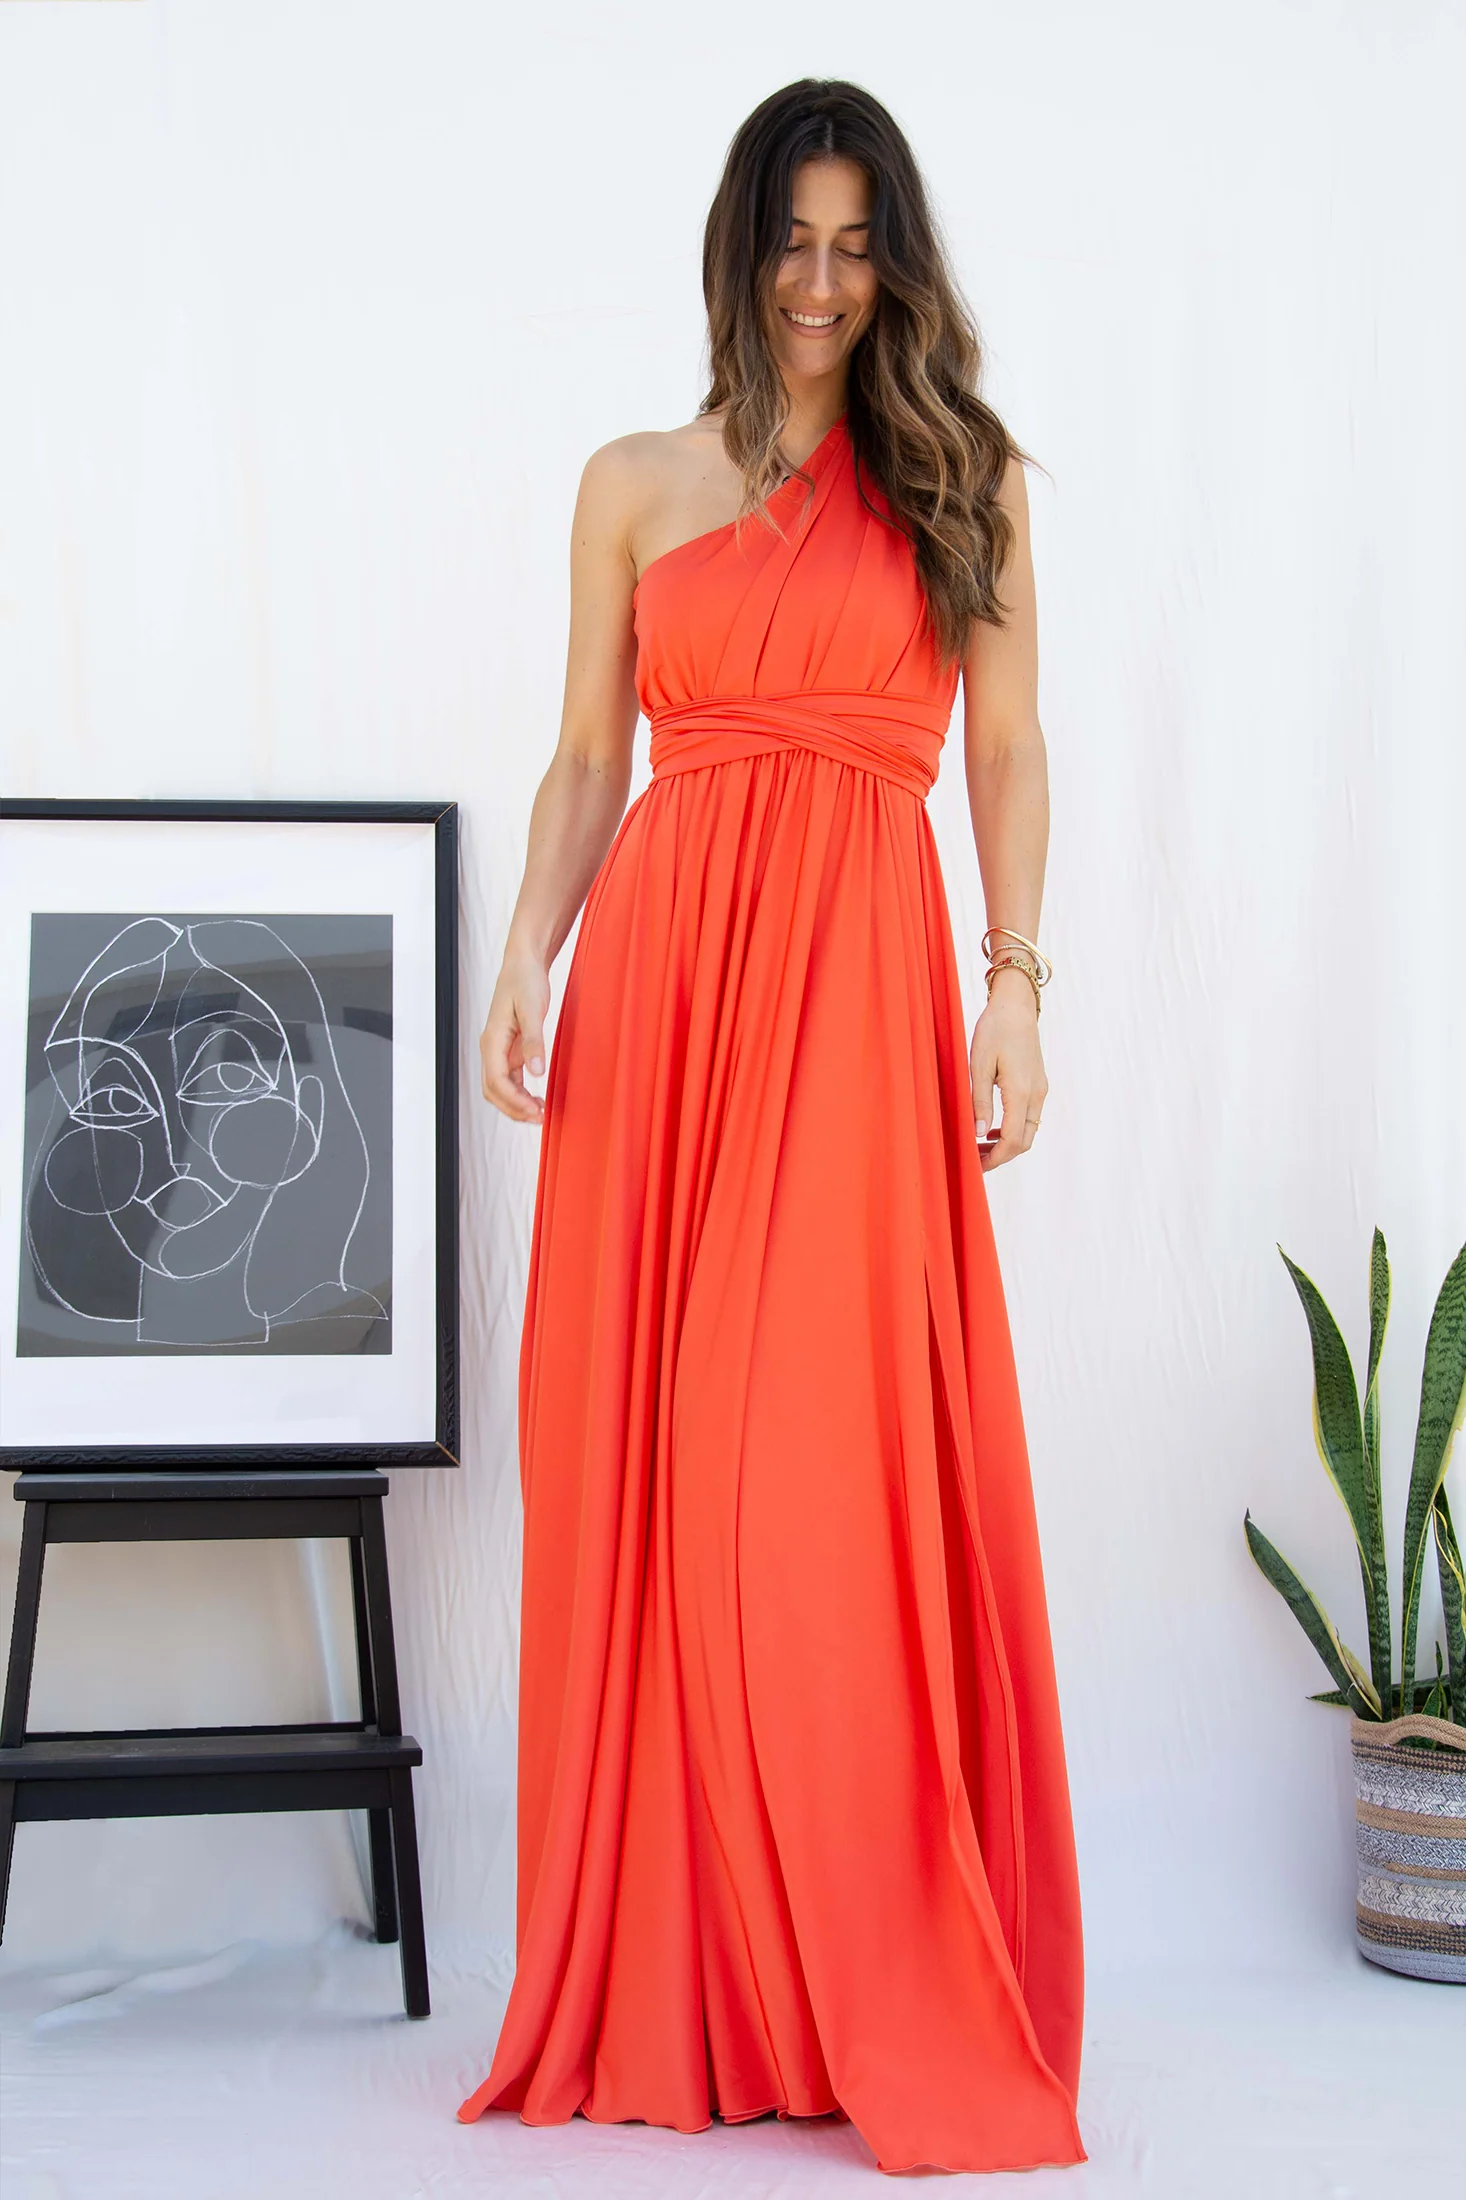 Hemithea Mariloo Super Dress (orange)